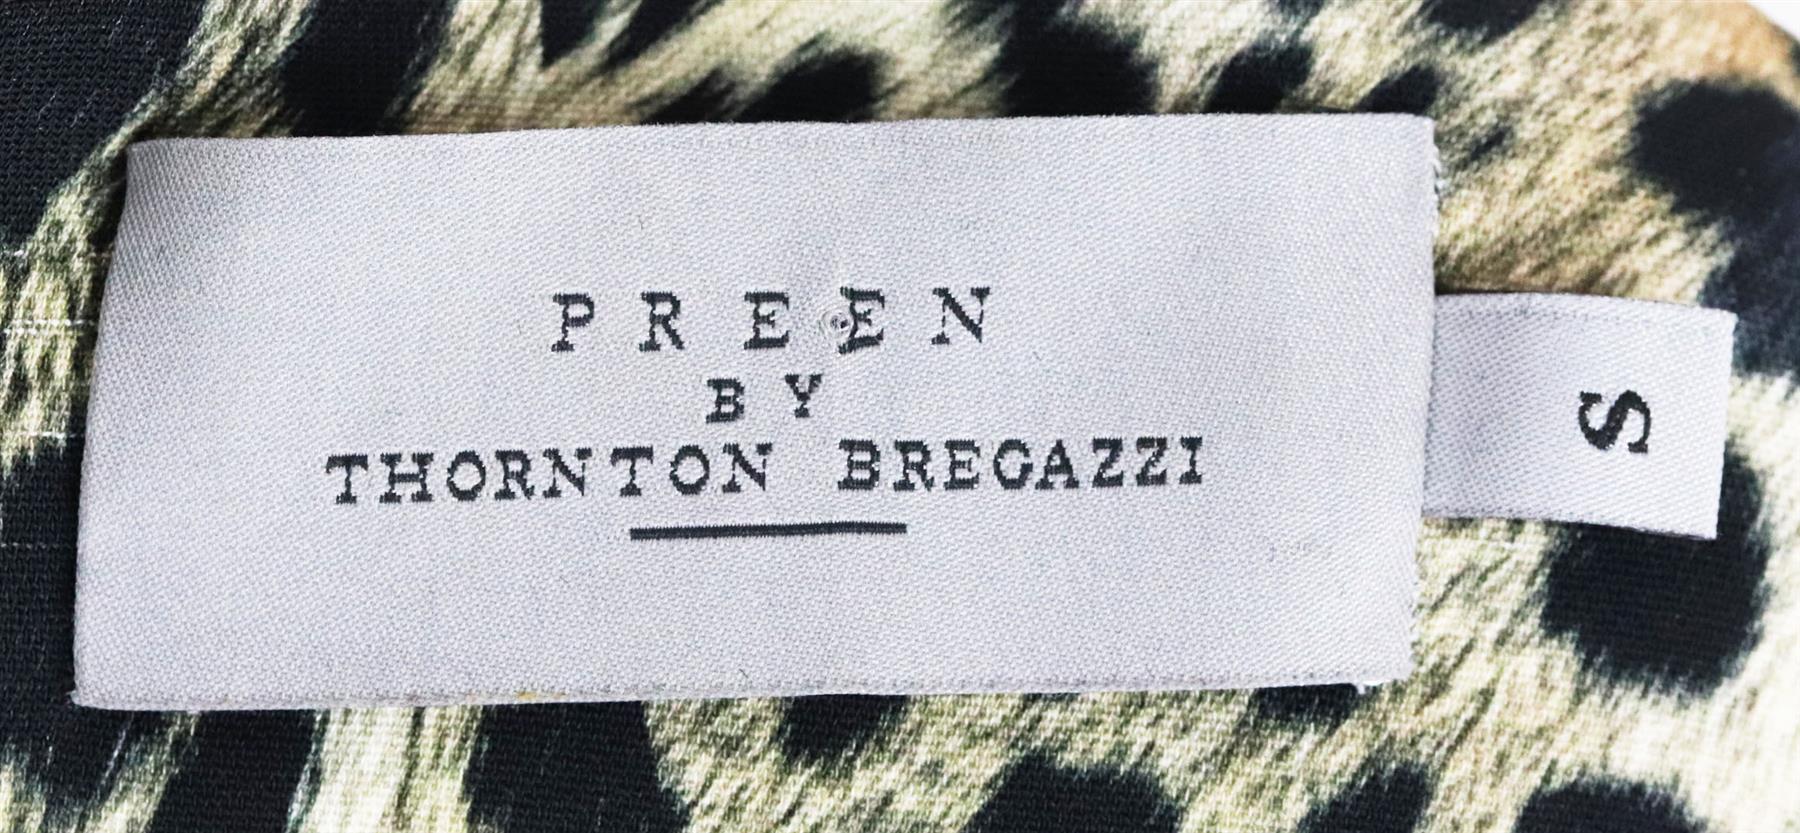 PREEN BY THORNTON BREGAZZI WRAP EFFECT PRINTED JERSEY DRESS SMALL